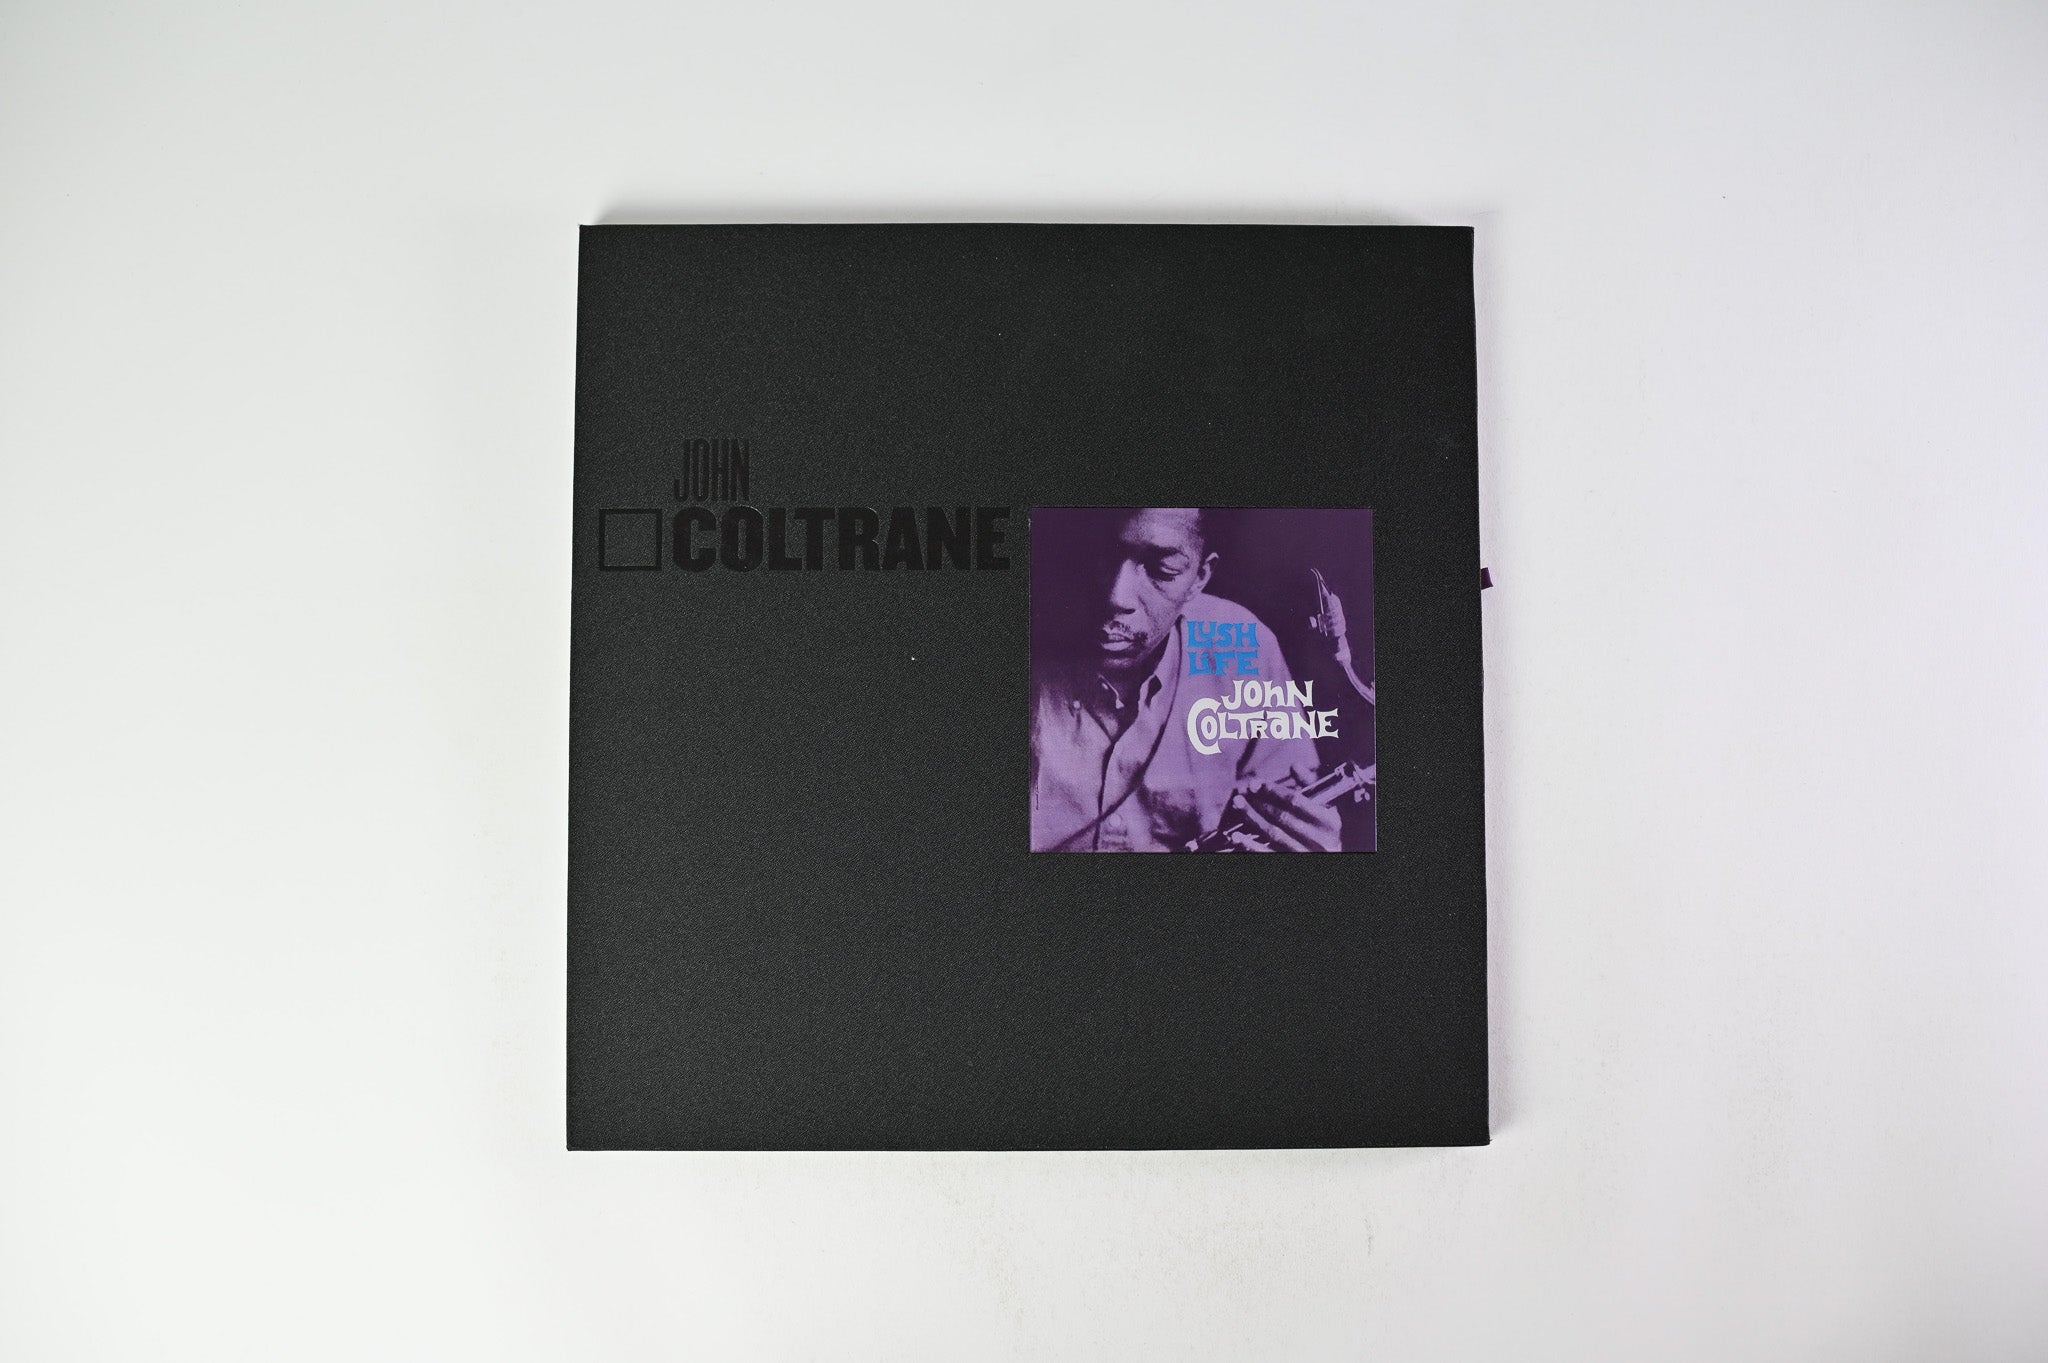 John Coltrane - Lush Life Numbered Reissue on Craft Recordings/Prestige